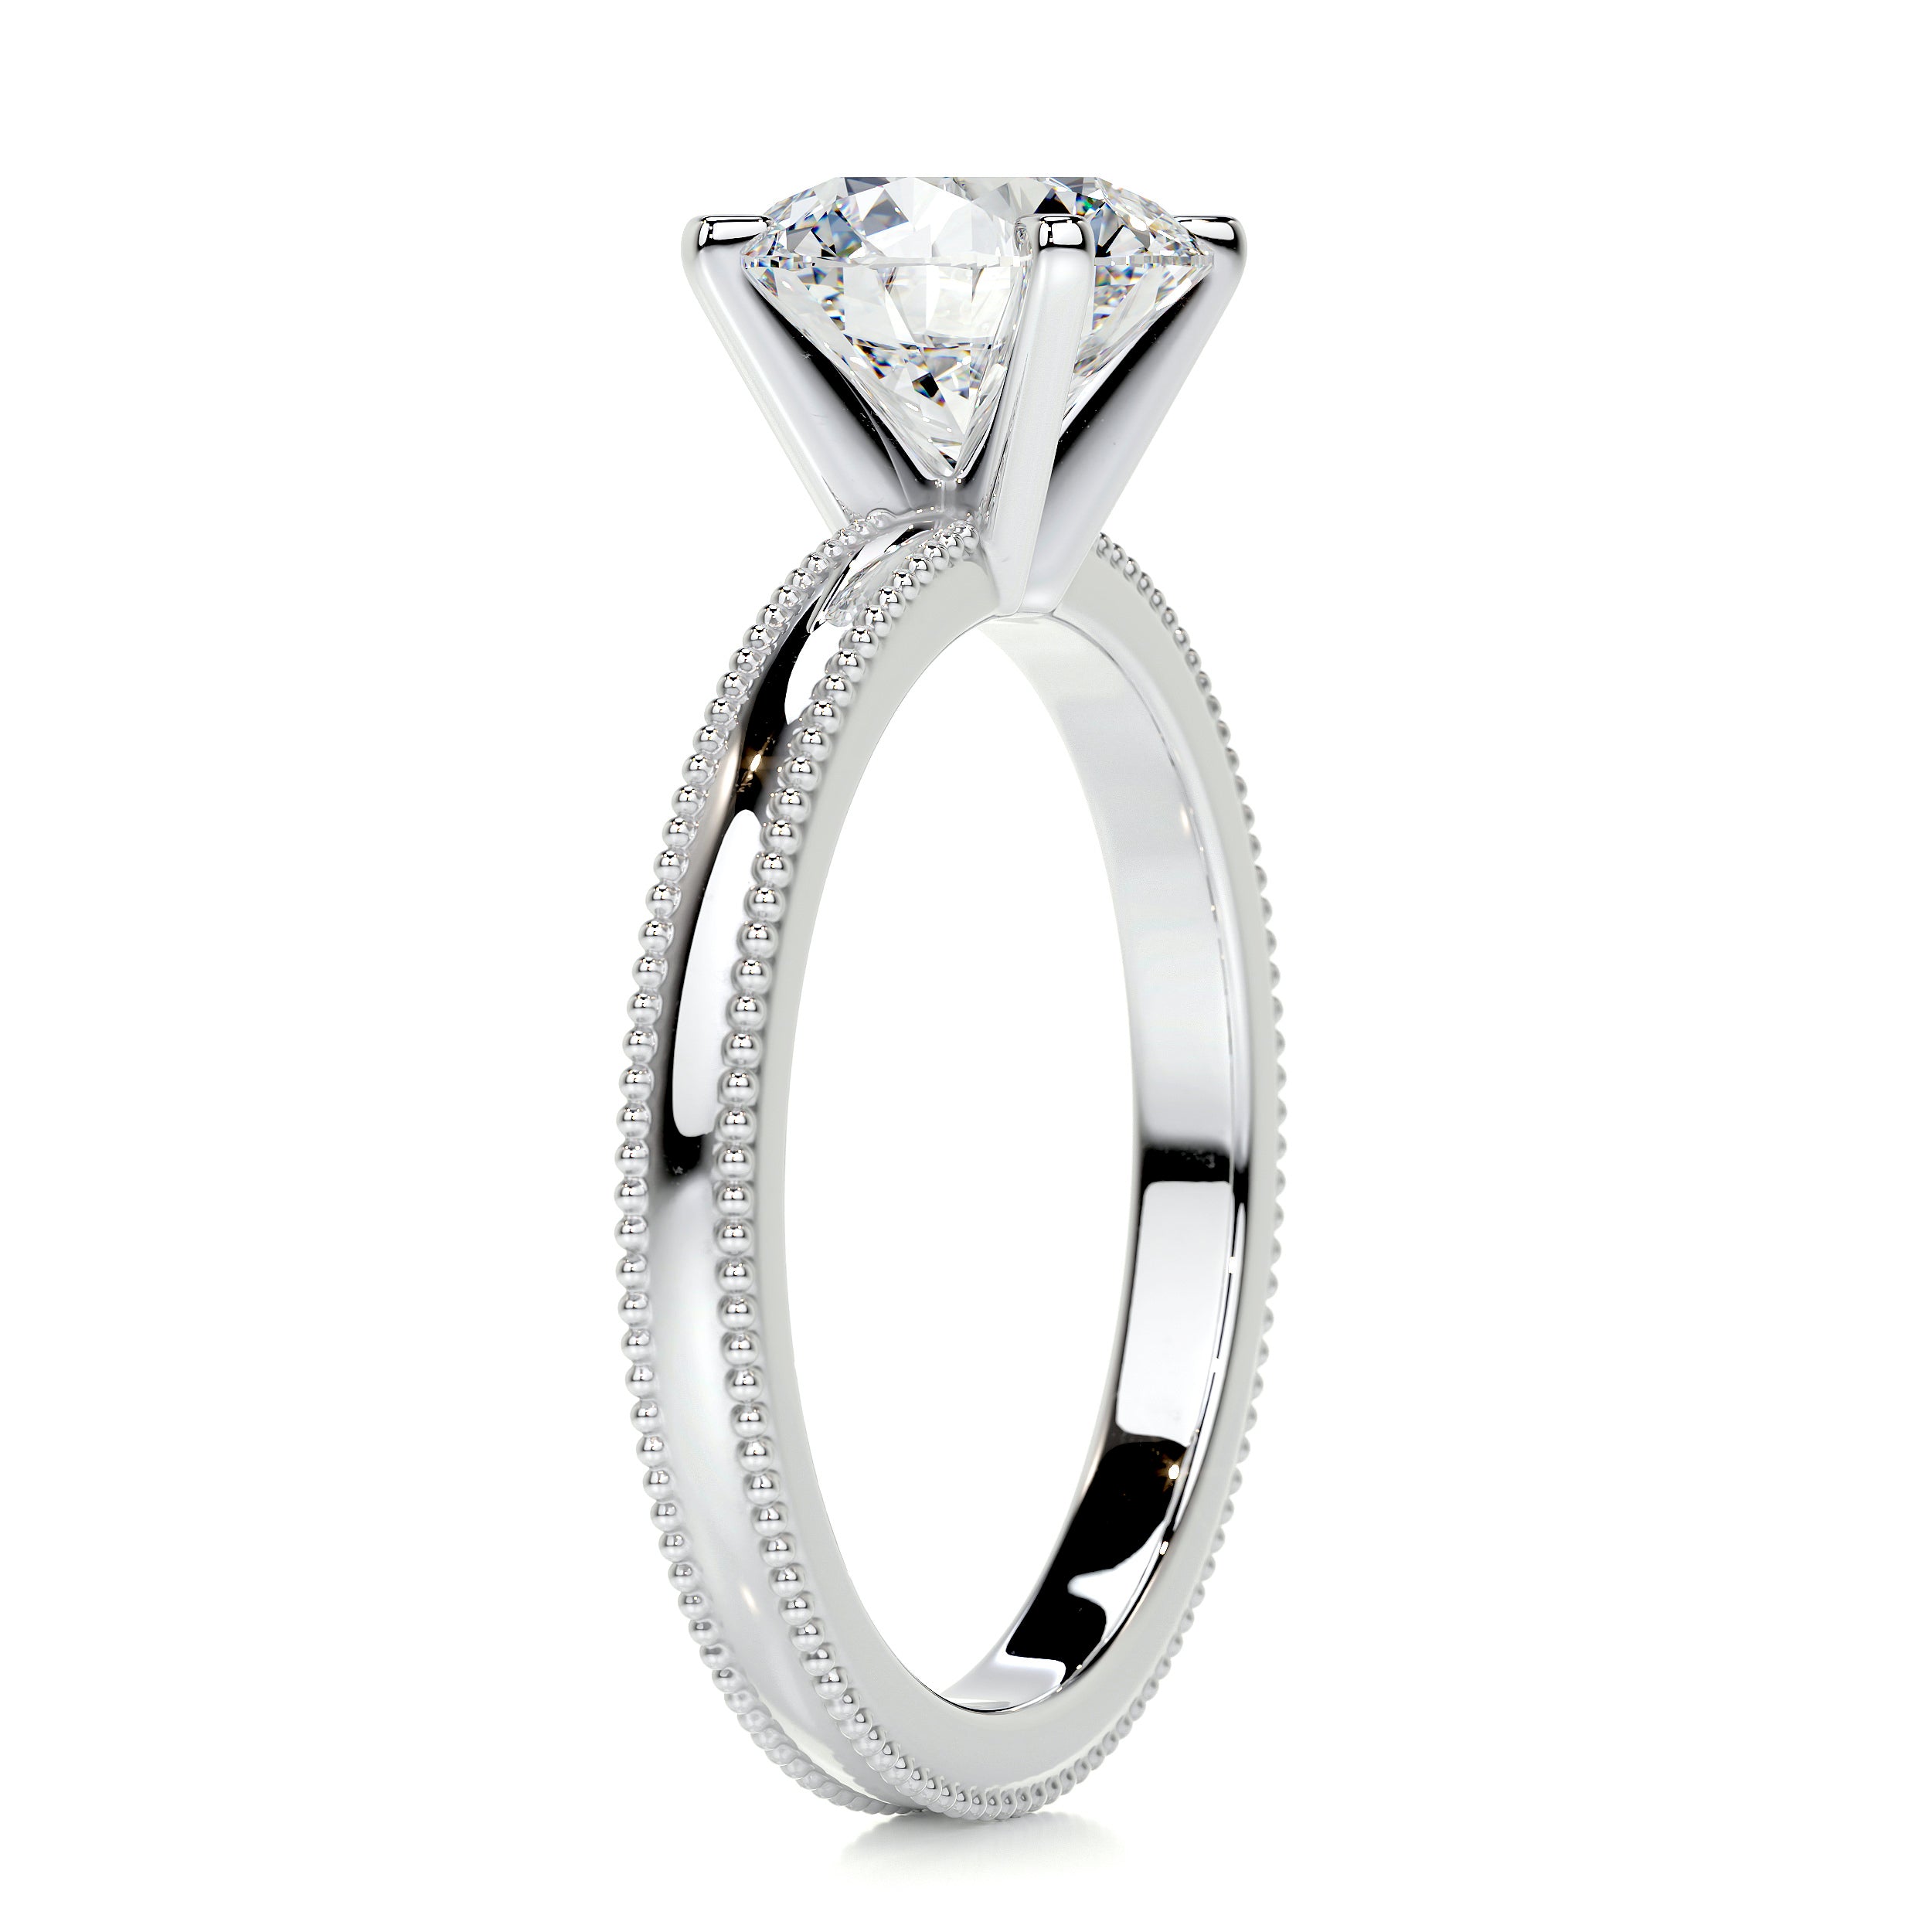 Charlie Diamond Engagement Ring   (2 Carat) -18K White Gold